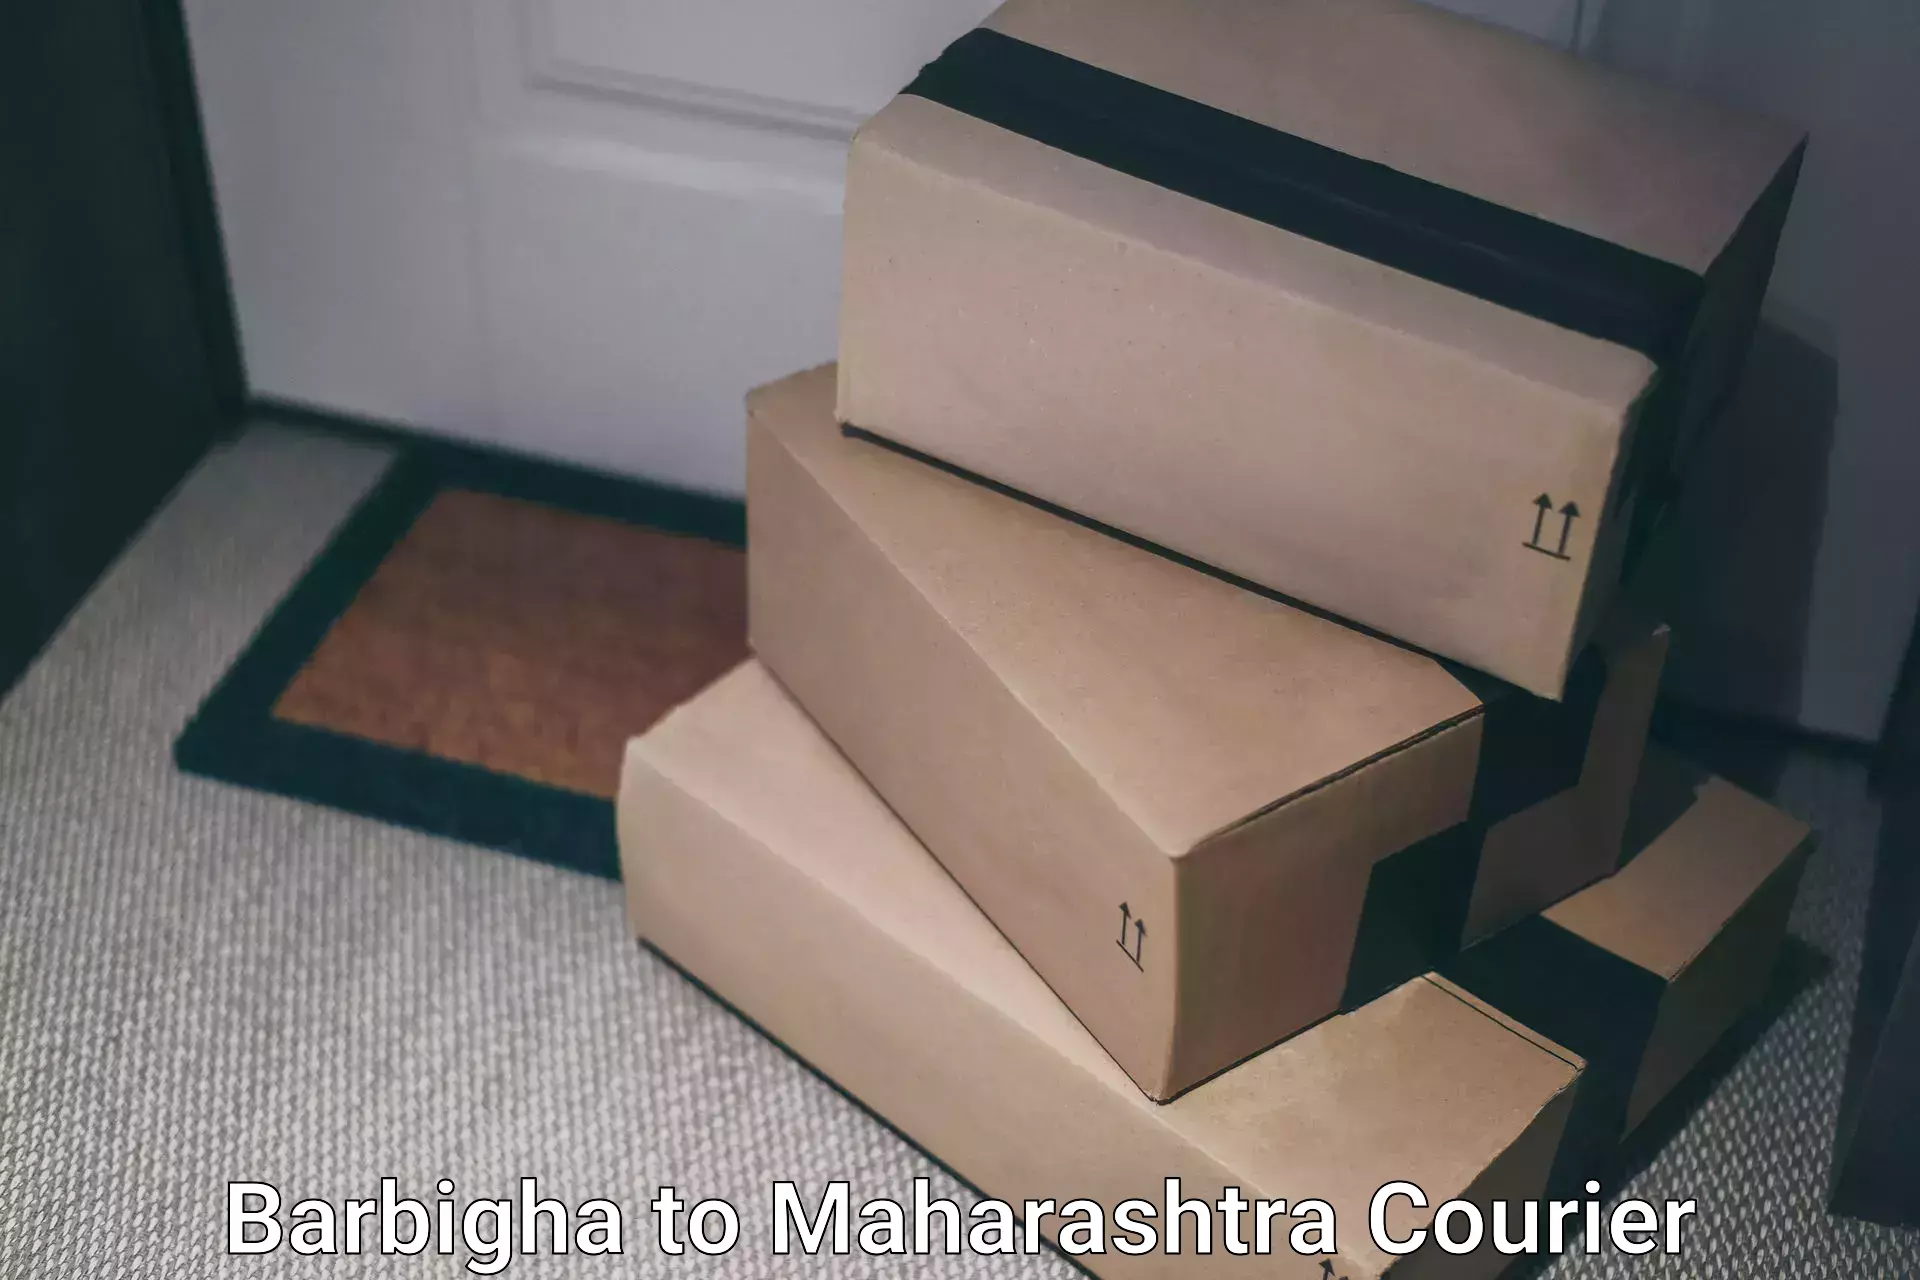 Courier service comparison Barbigha to Shevgaon